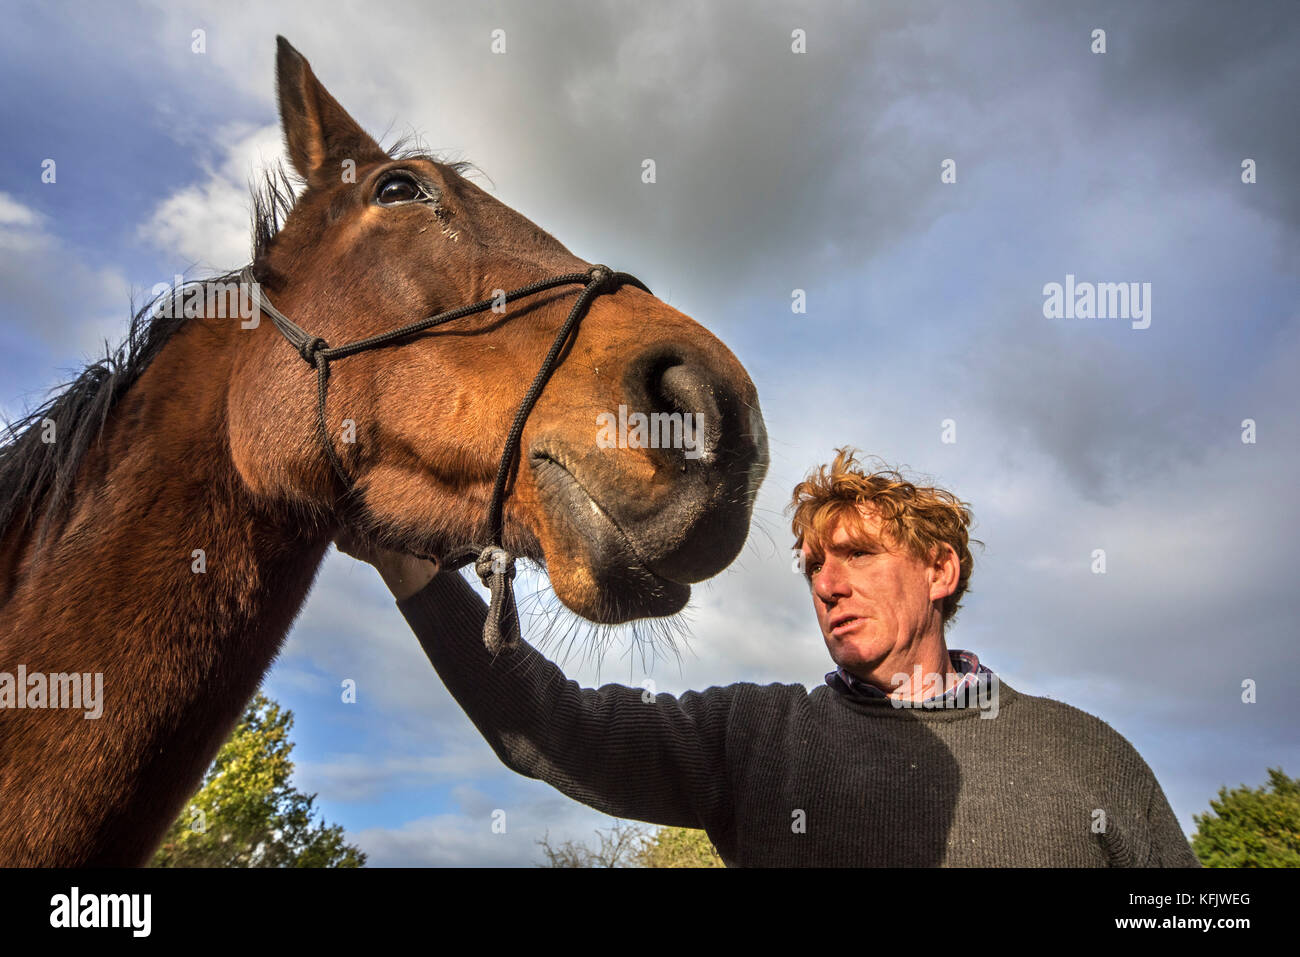 Close up portrait of horse whisperer / natural horsemanship practitioner holding brown horse outdoors Stock Photo